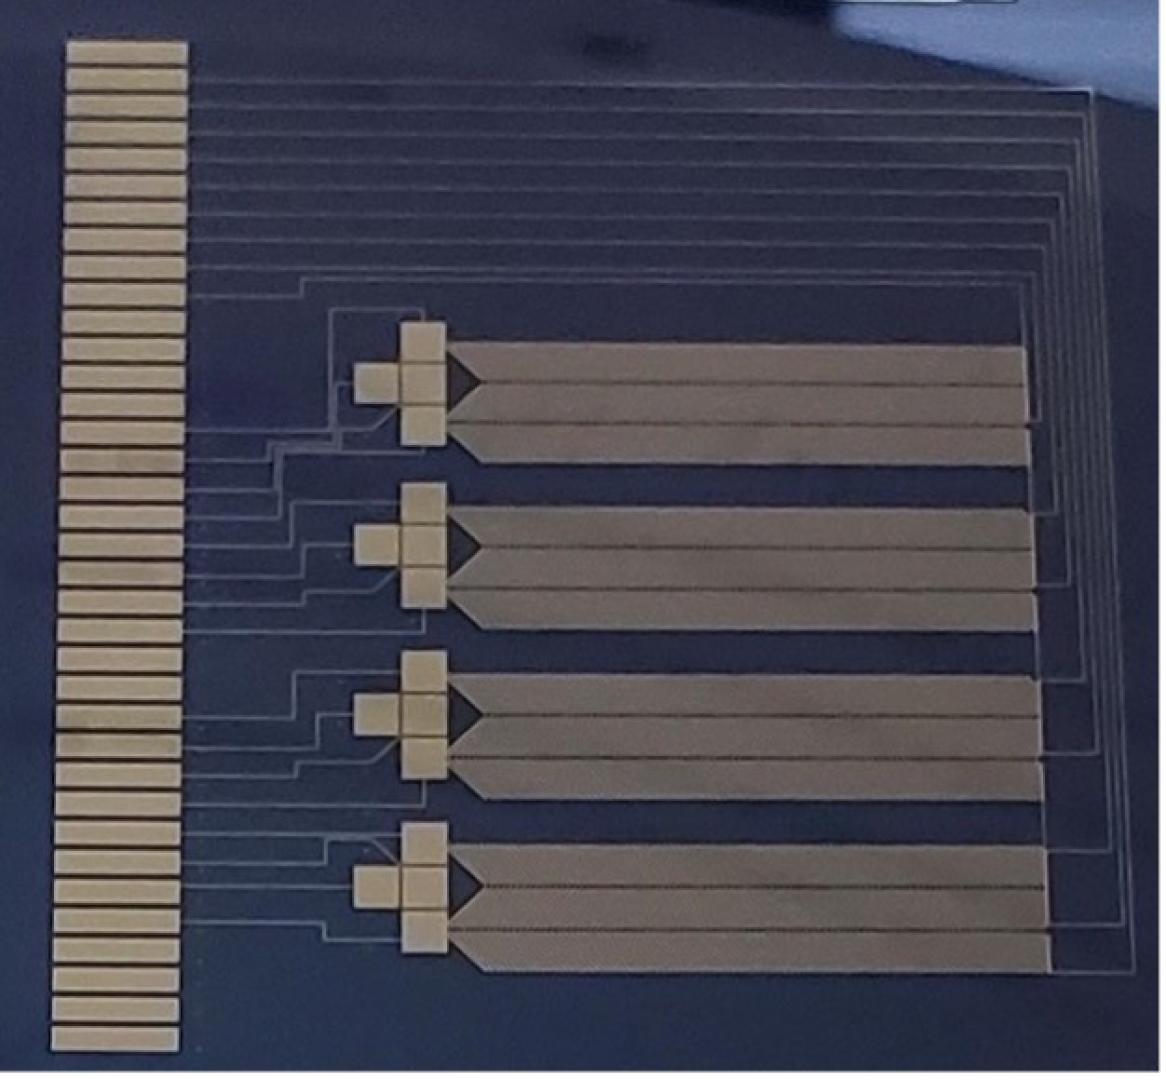 Four-channel qPCR micro-chip array representation